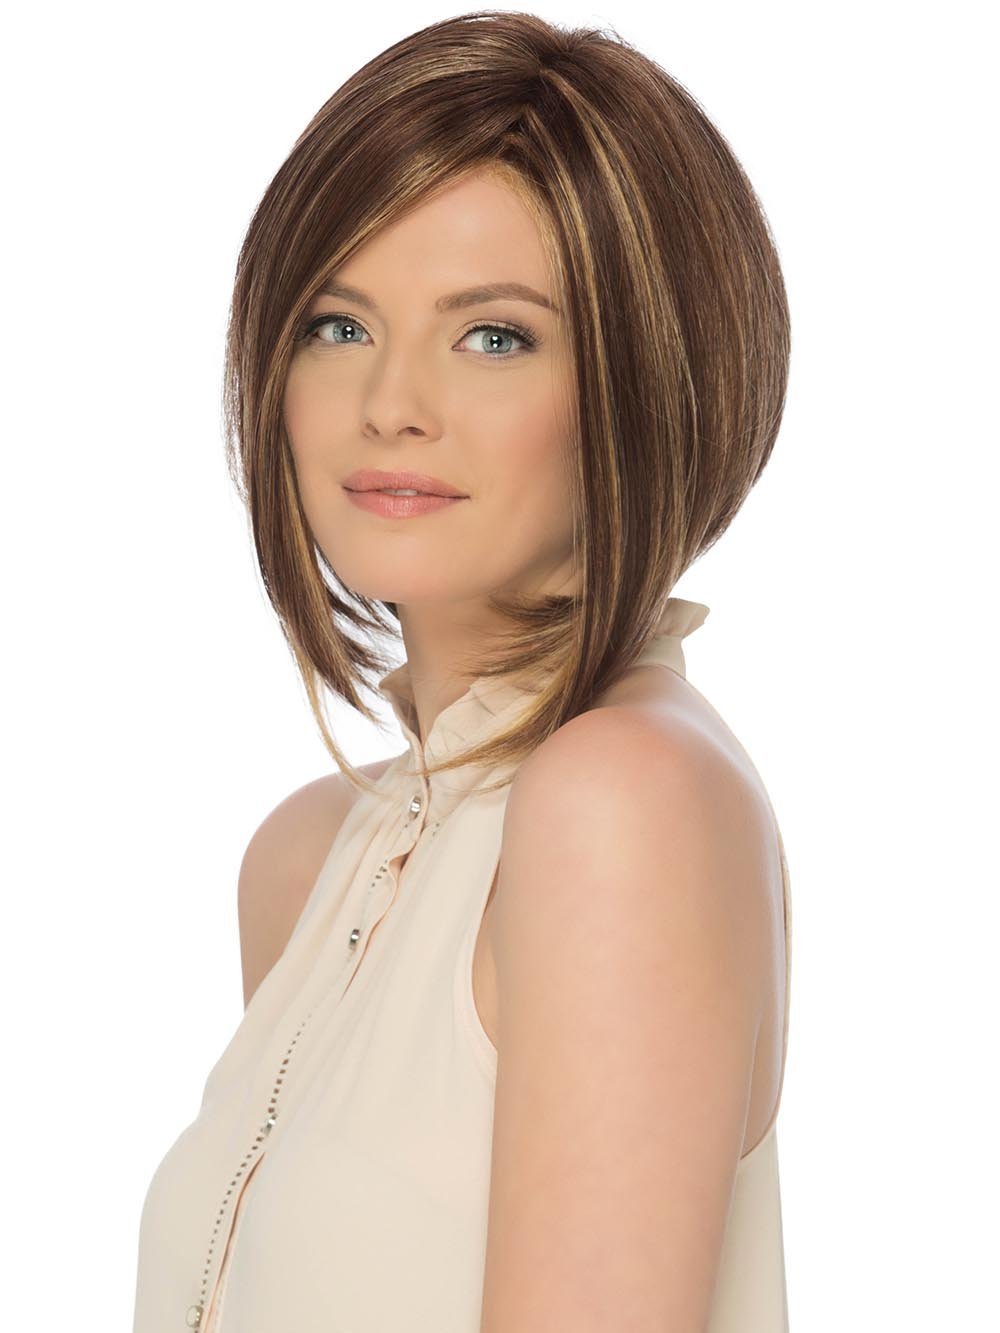 Emery Wig by Estetica is sleek, trendy and stylish